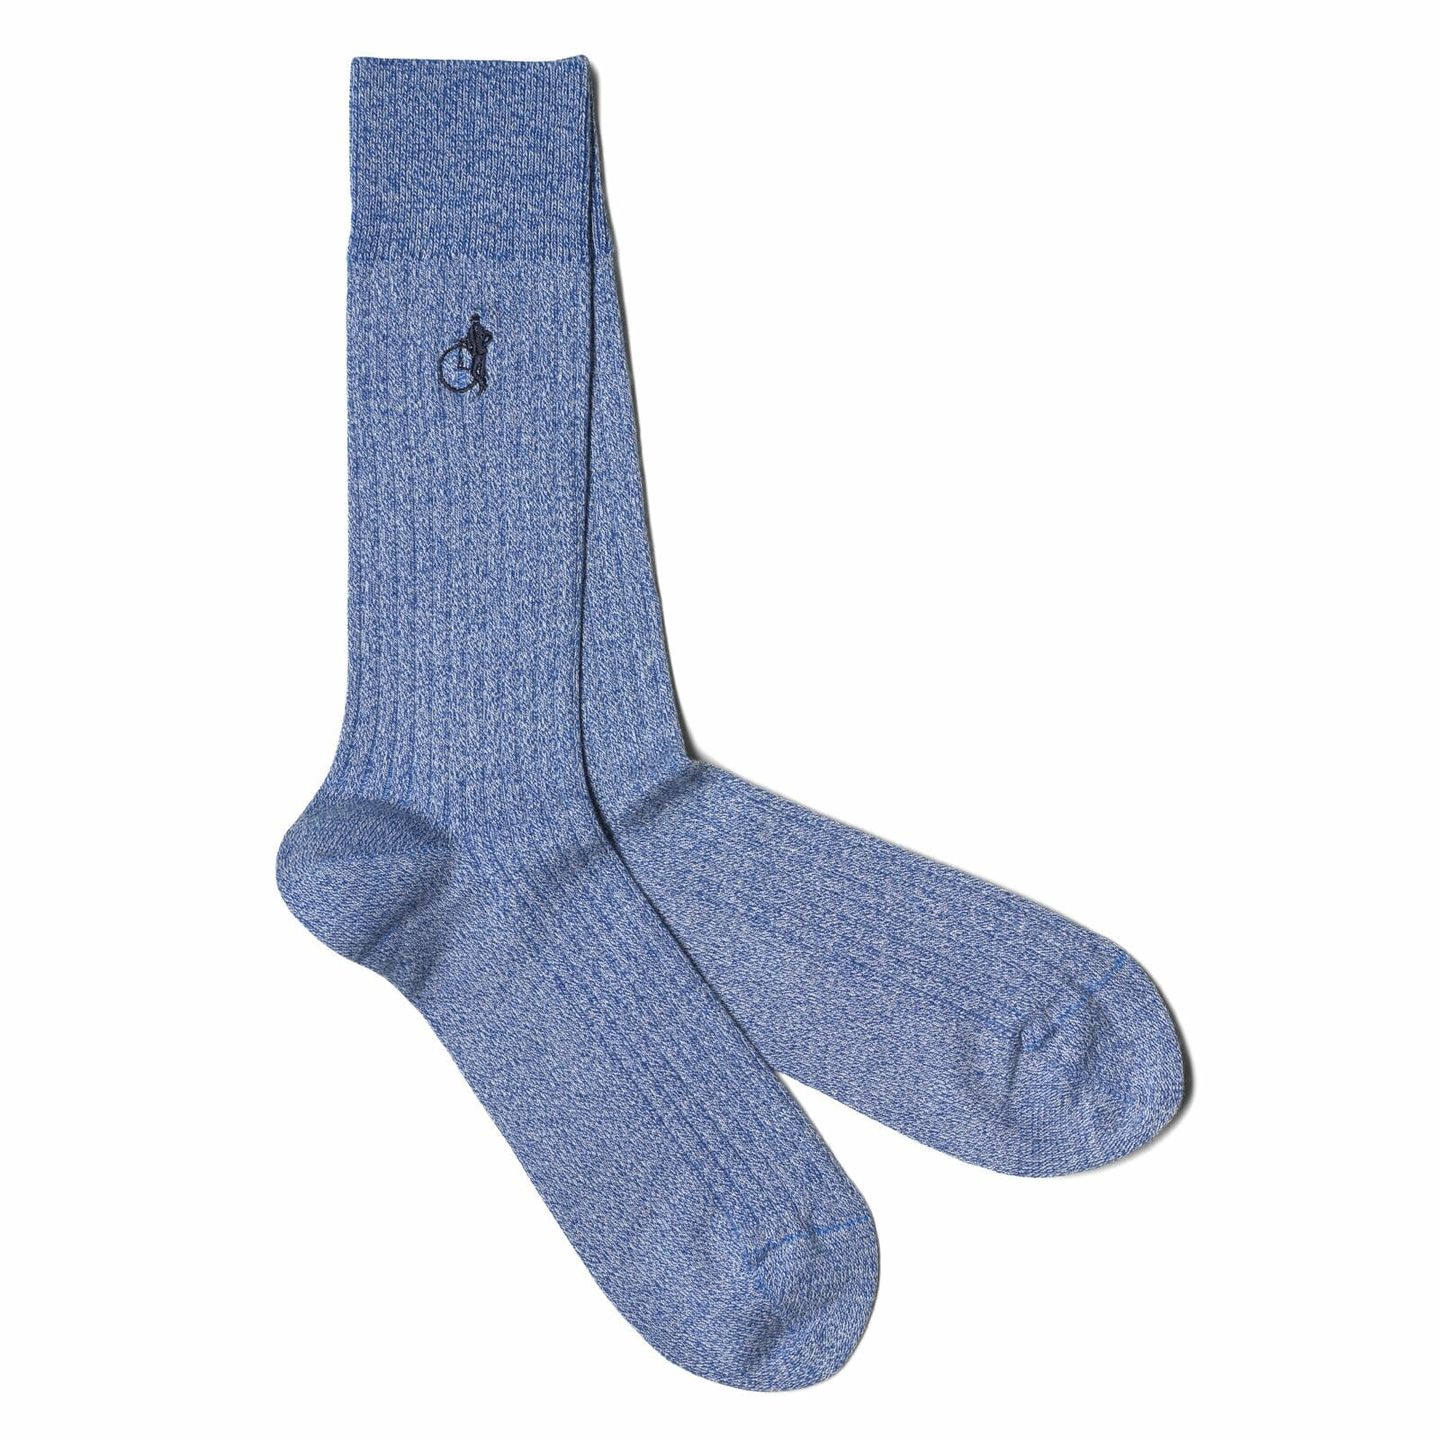 Blue Denim Coloured Marl Socks with London Sock Company logo embroidered